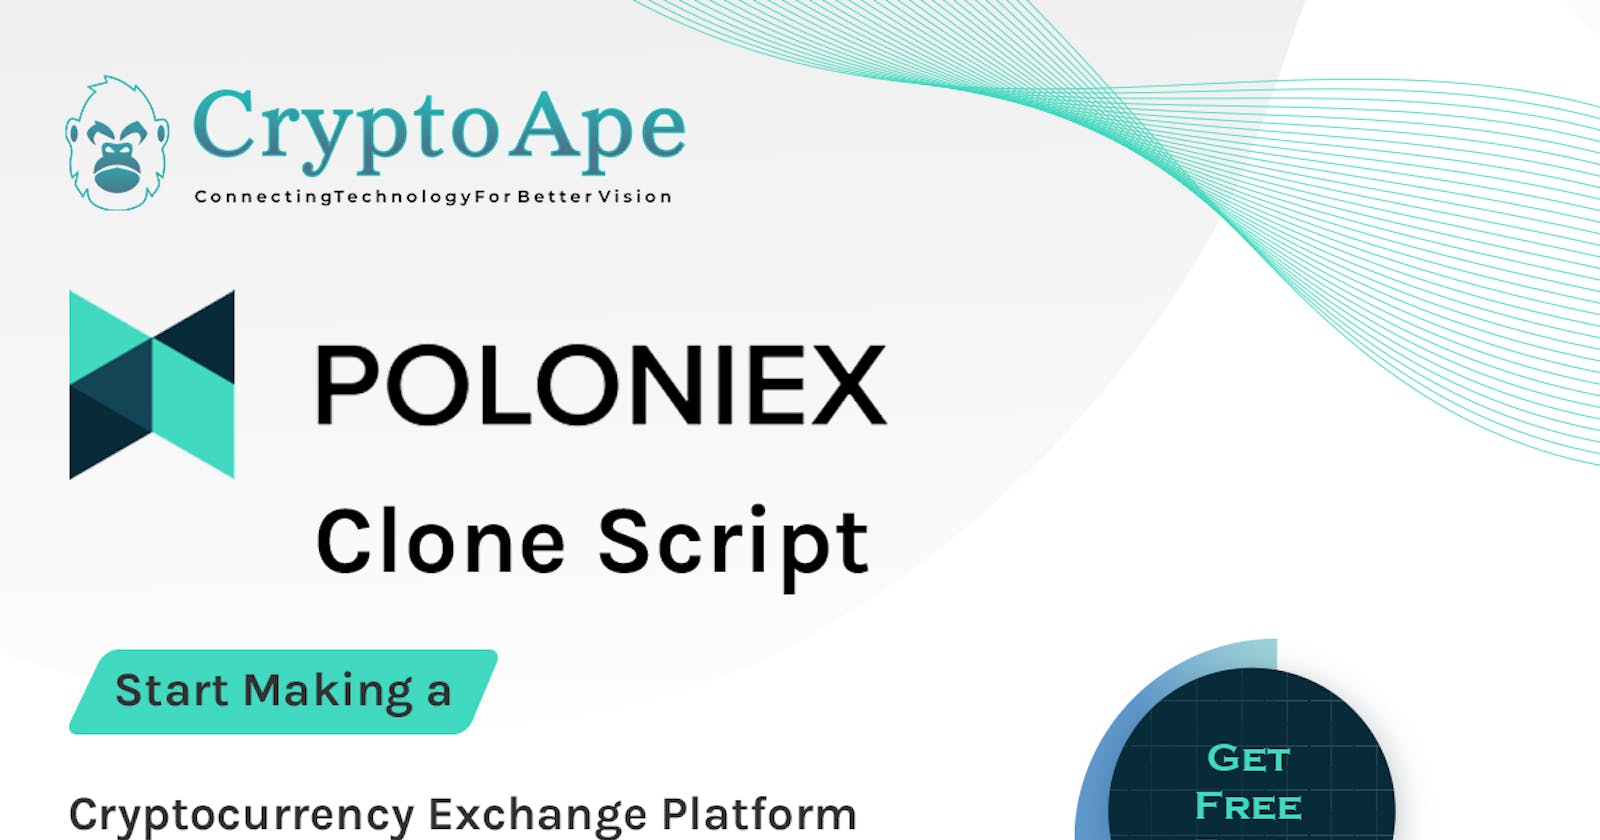 Our poloniex wallet development features